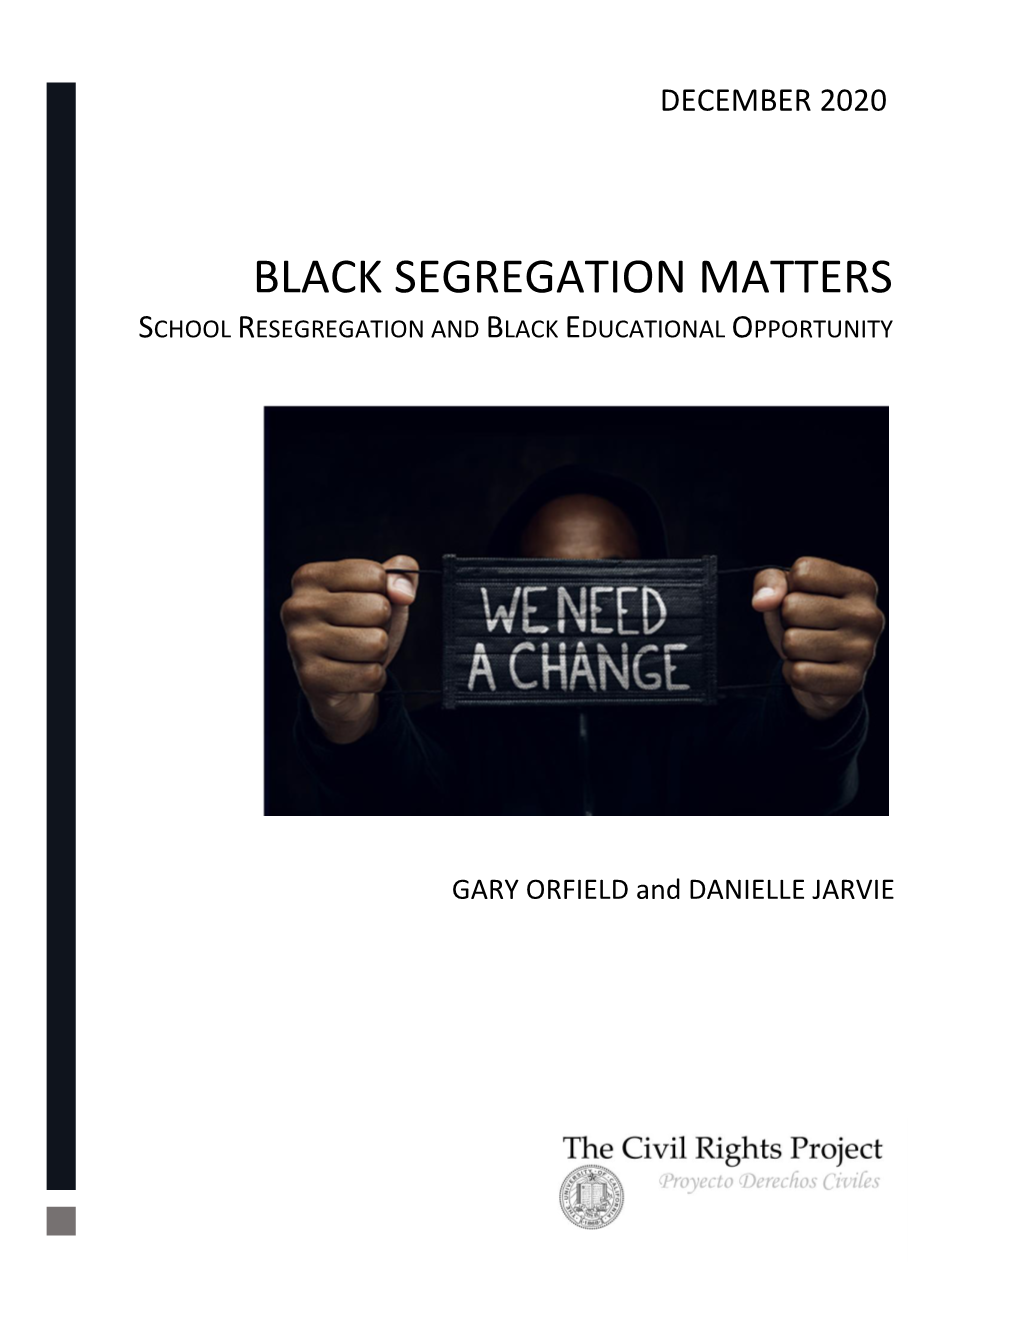 Black Segregation Matters School Resegregation and Black Educational Opportunity